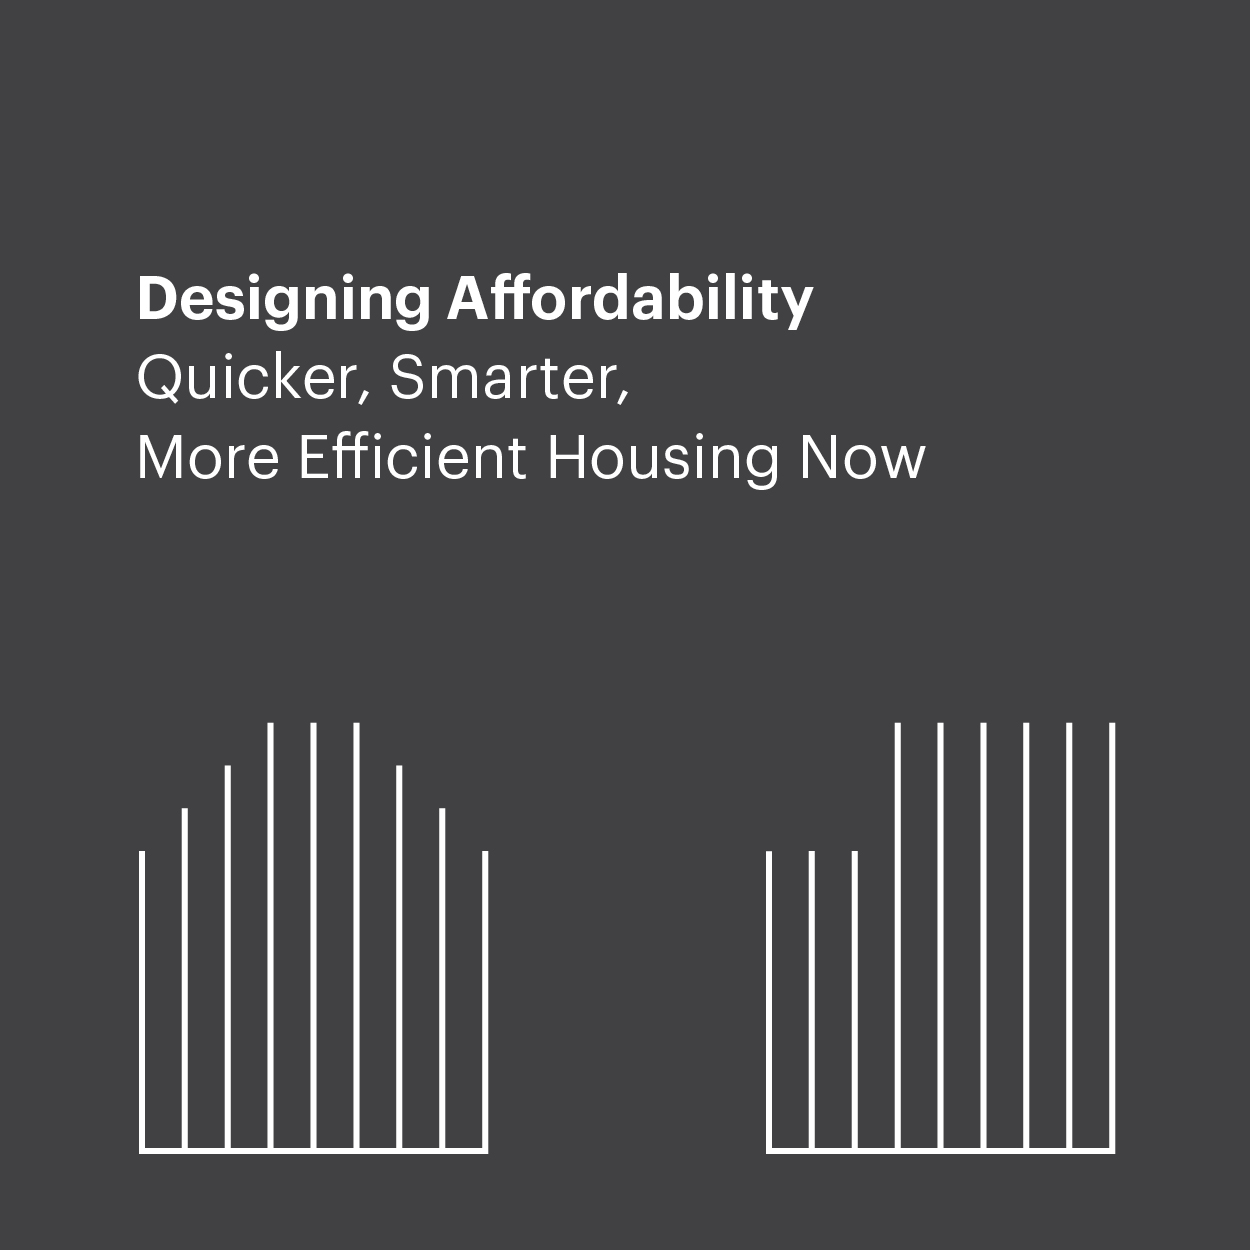 “Designing Affordability” Opens Tomorrow!